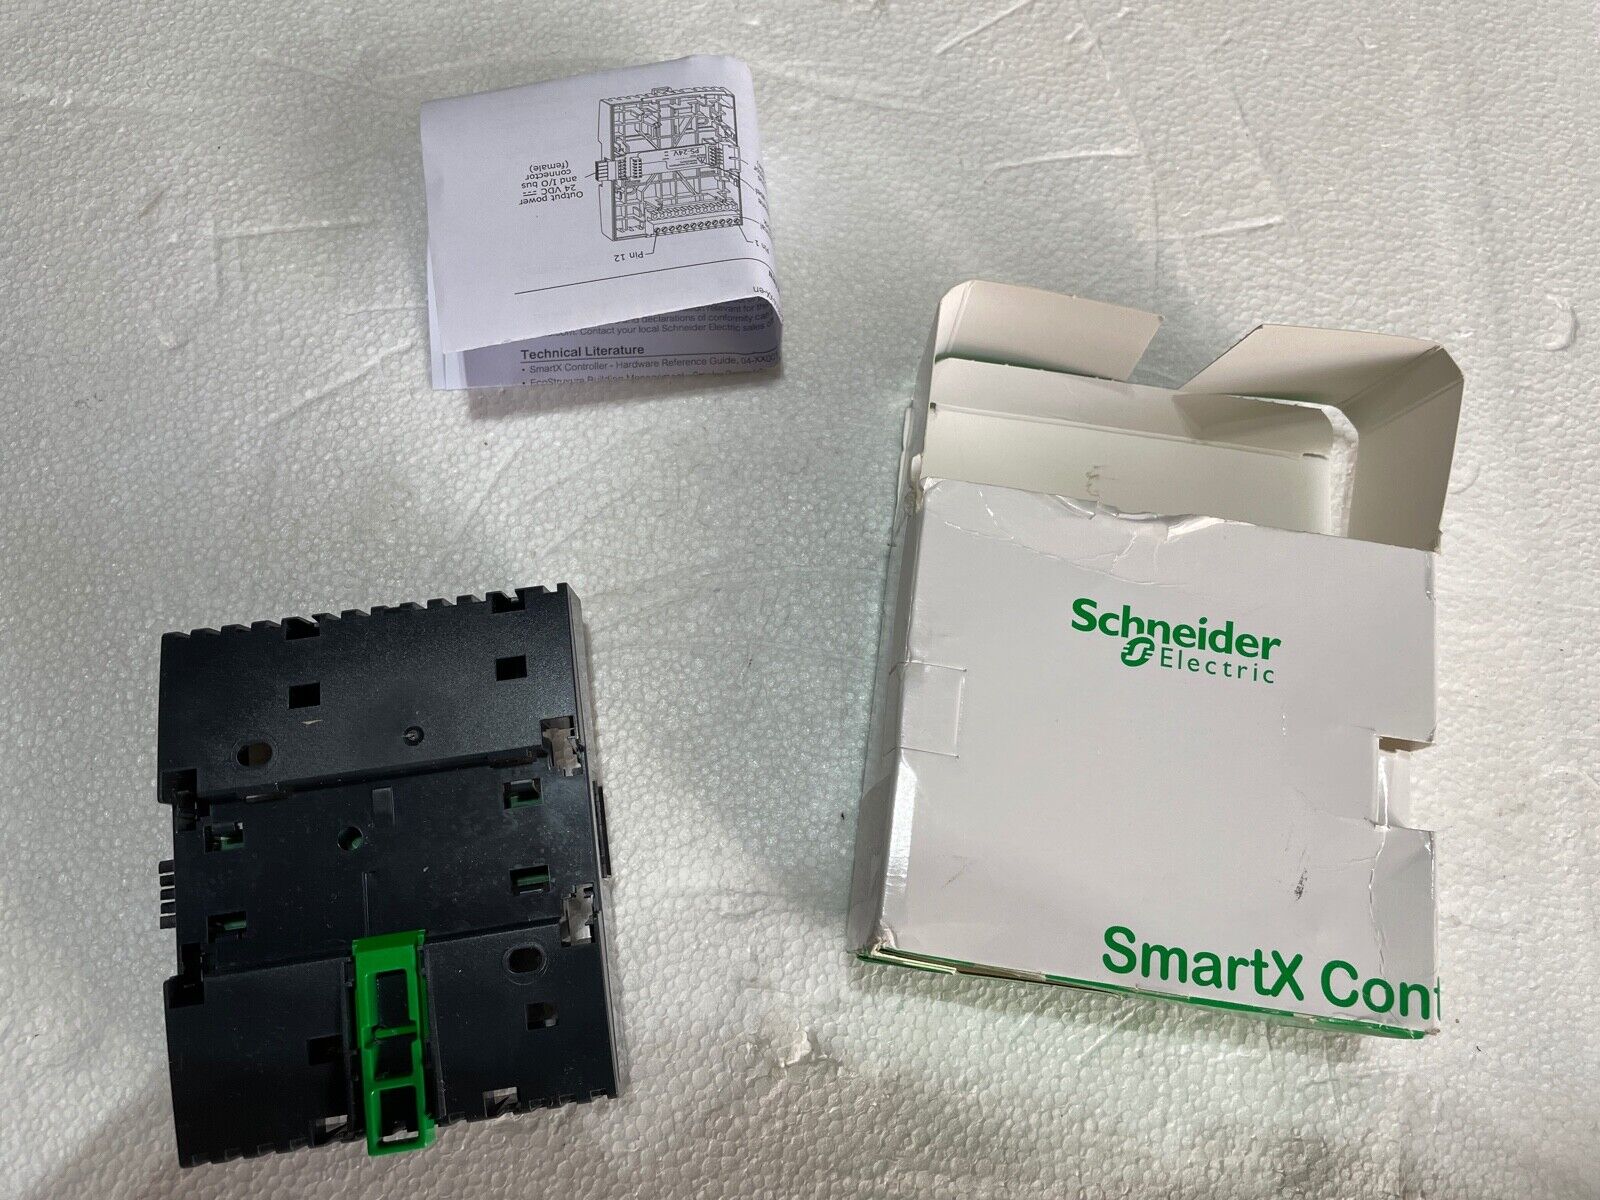 Schneider SXWTBPSW110001 SmartX Controller